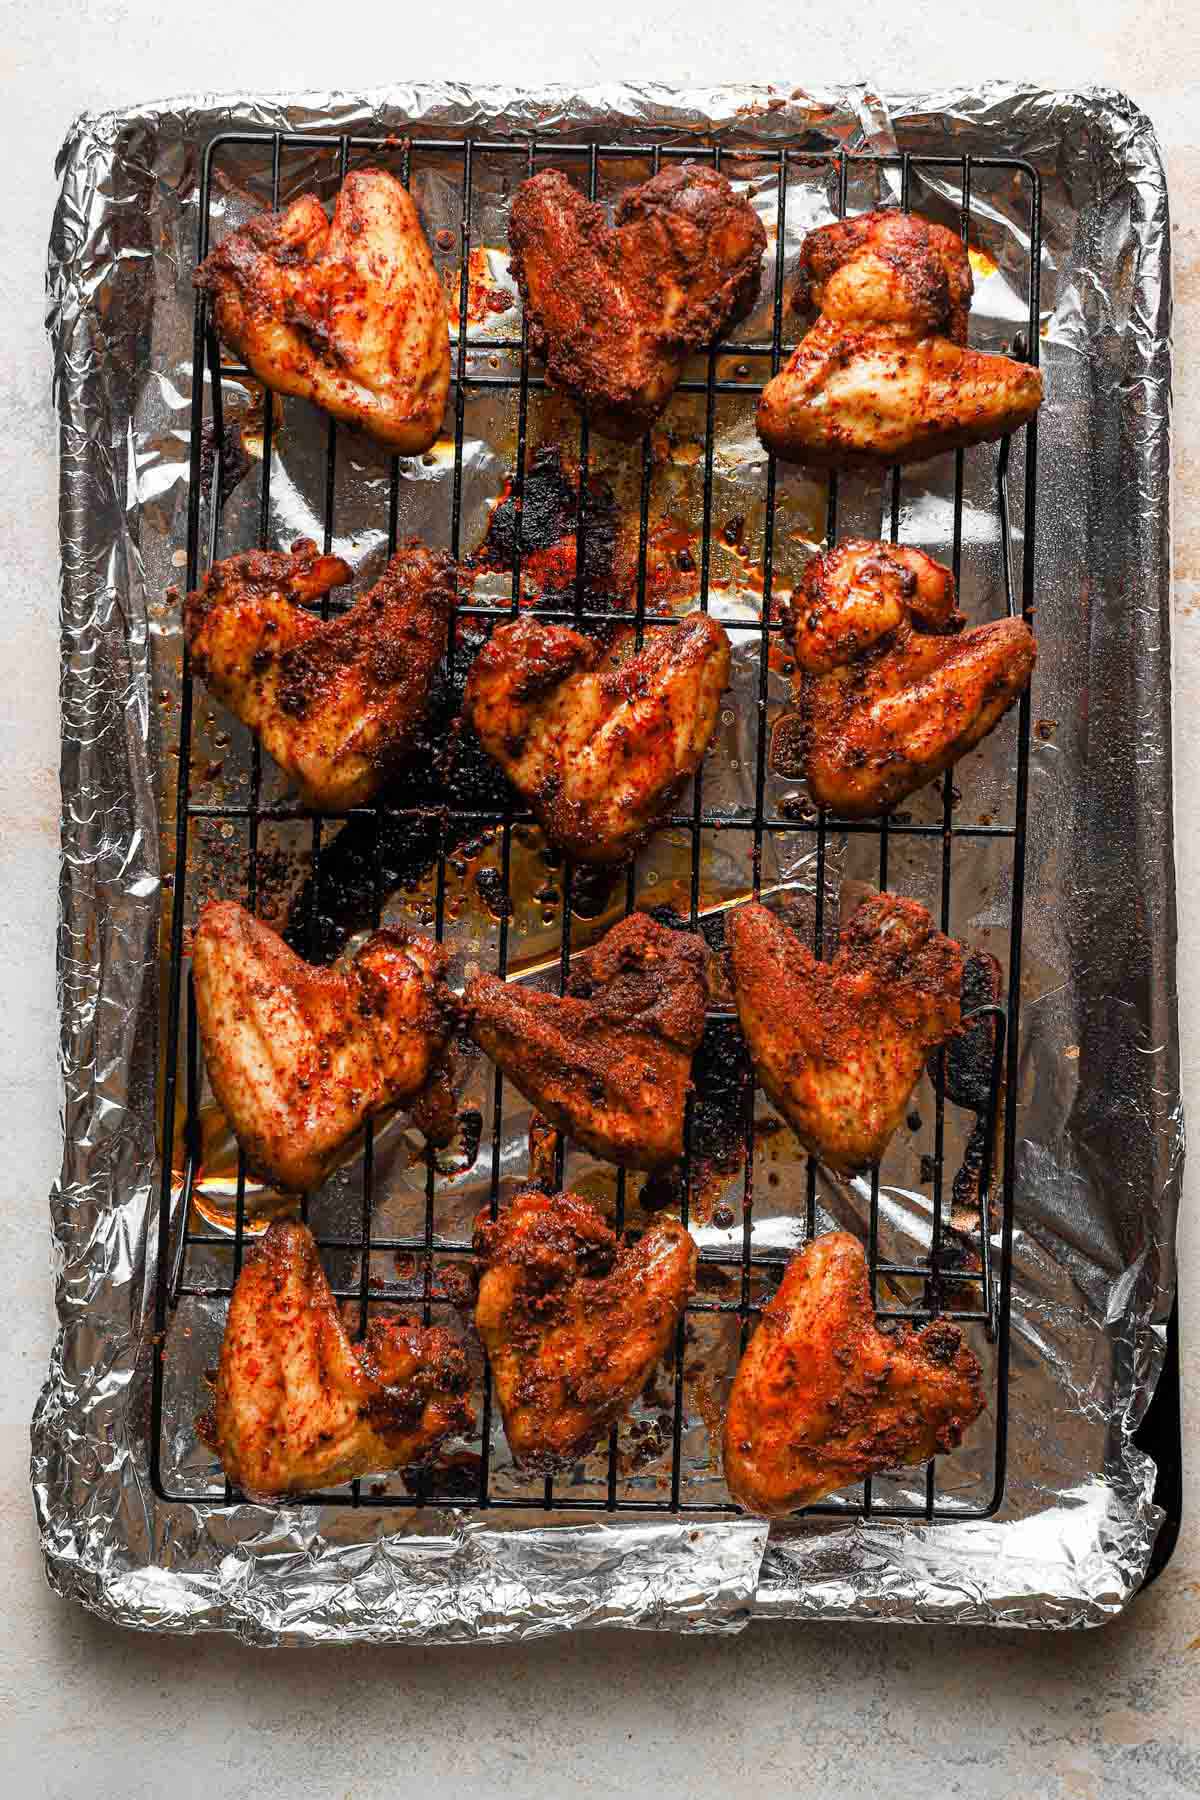 Baked chicken wings on a wire rack set inside a baking sheet.